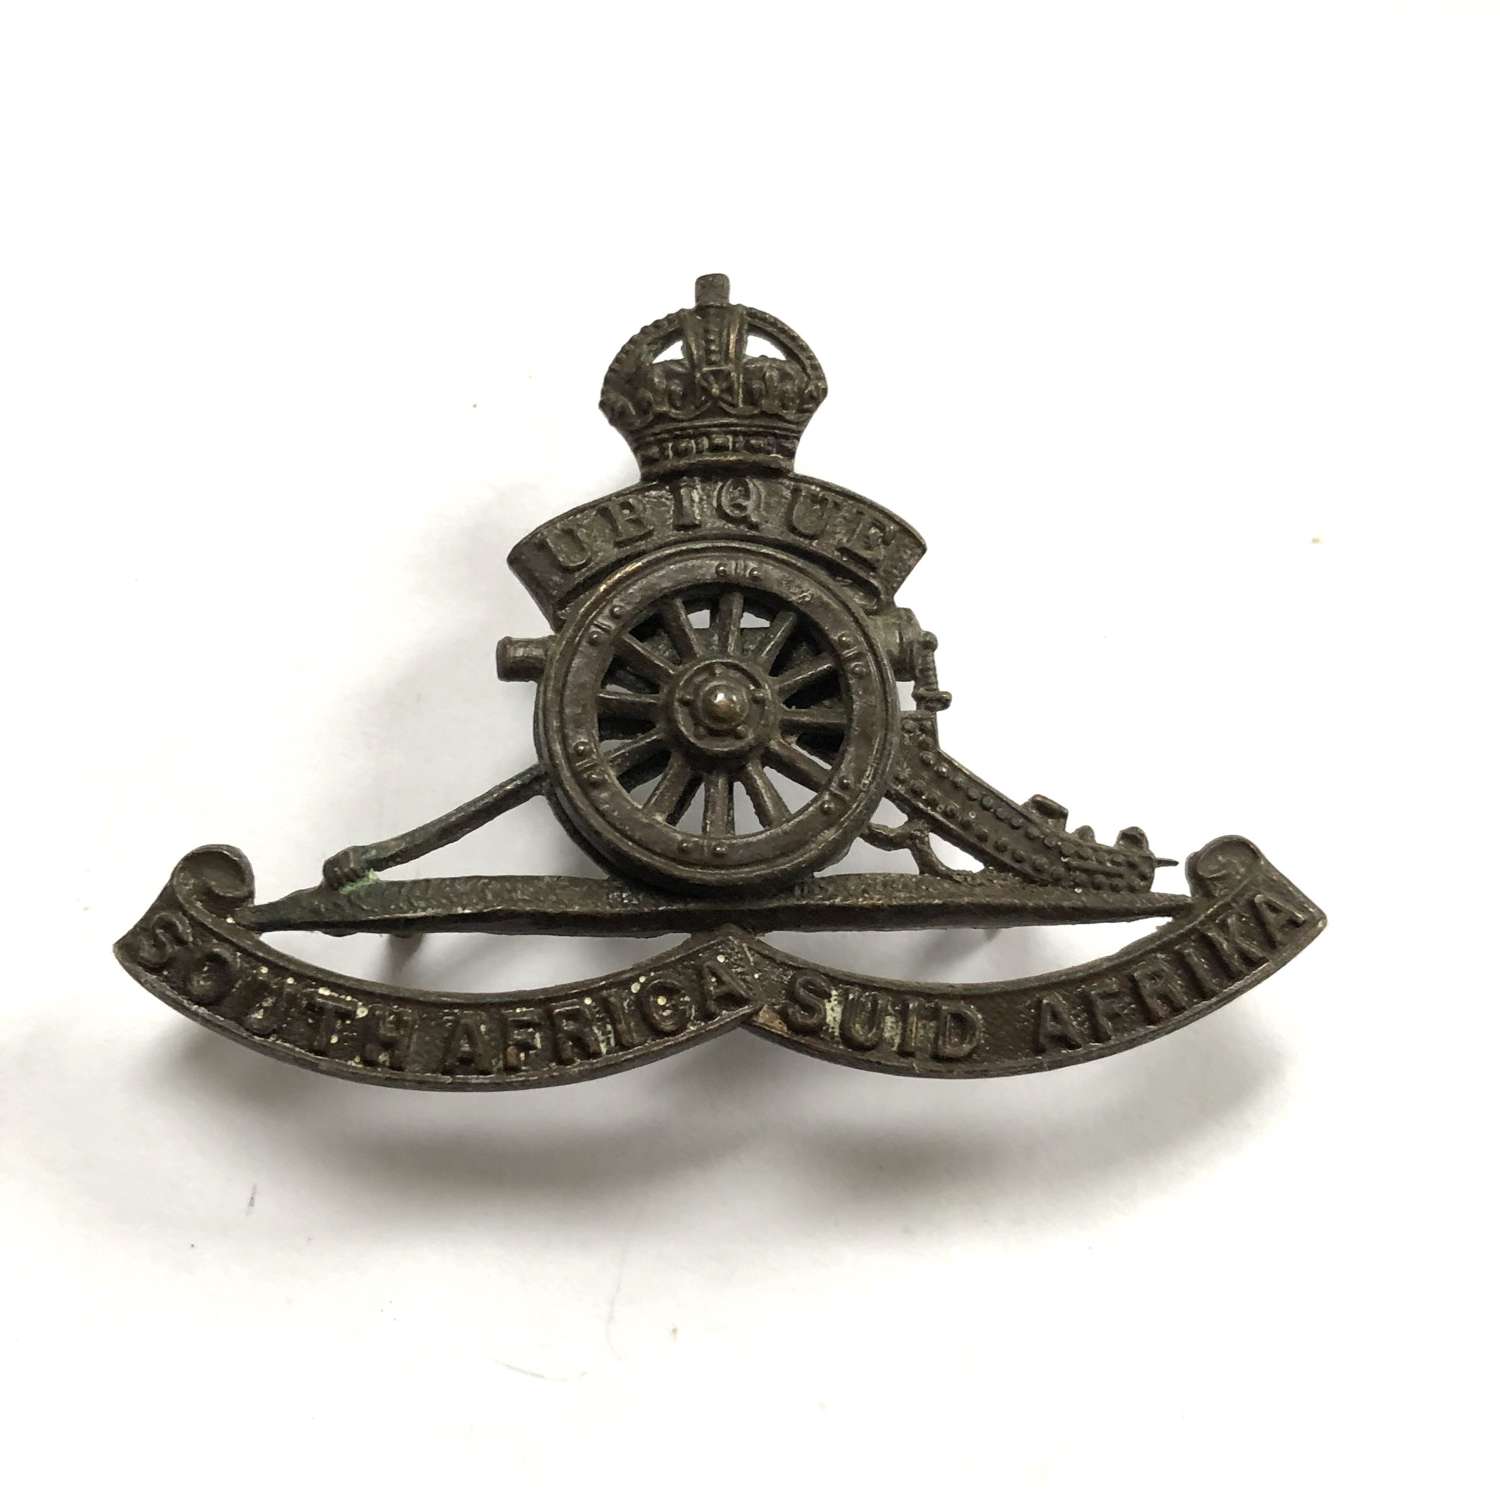 South African Artillery cap badge